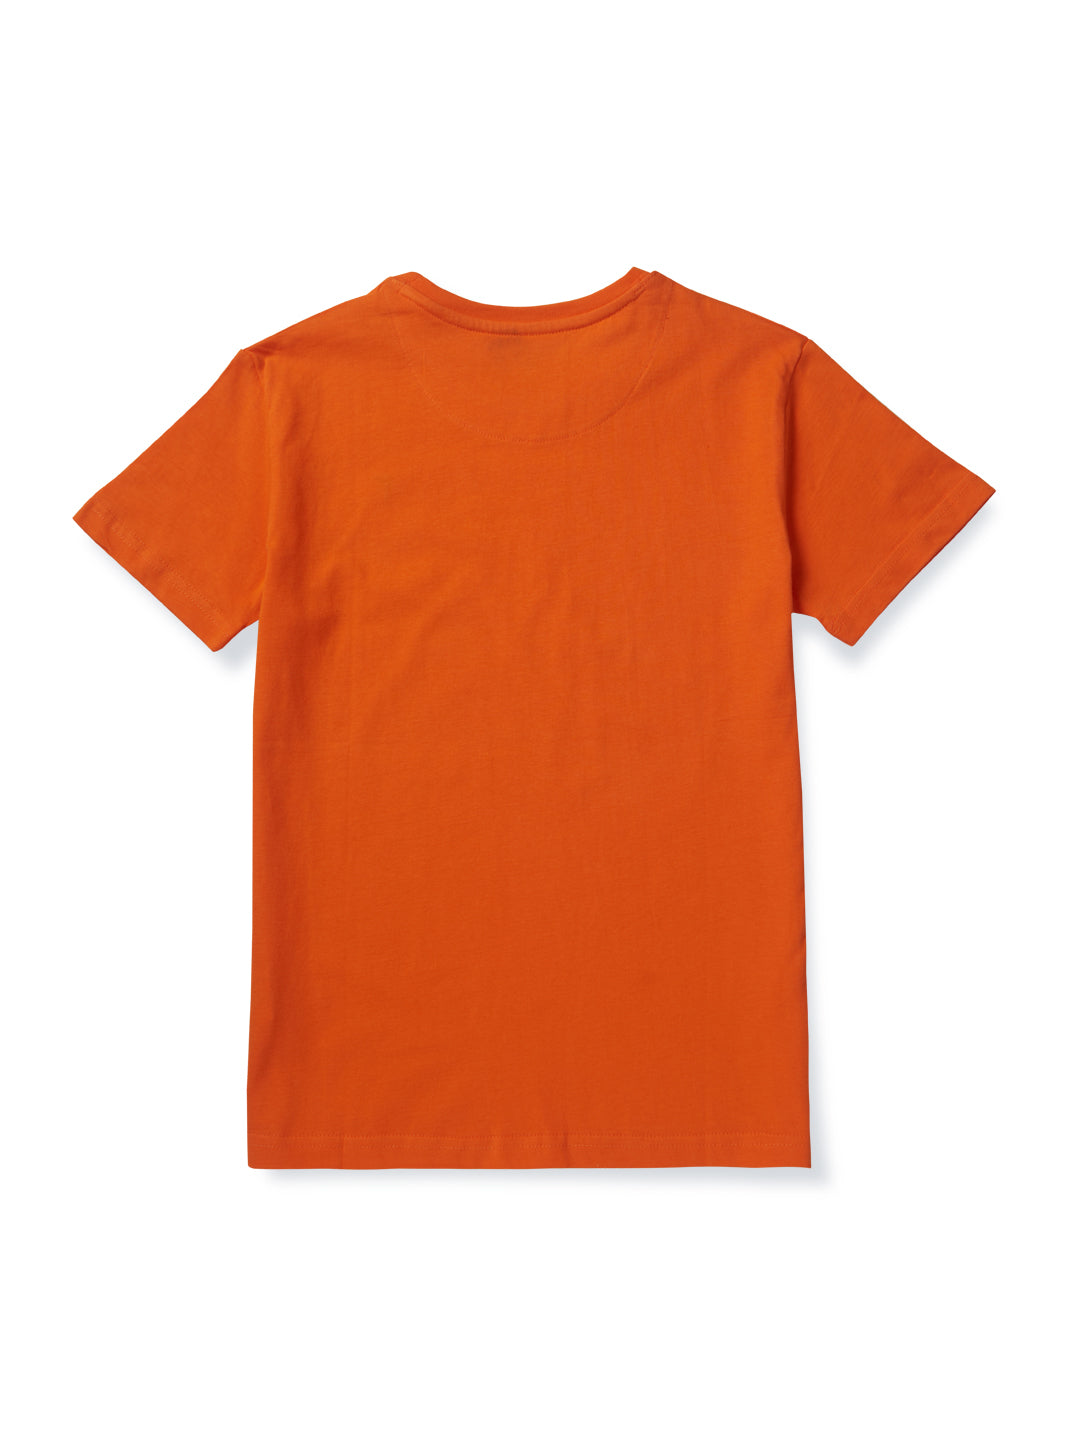 Boys Orange Solid Cotton T-Shirt